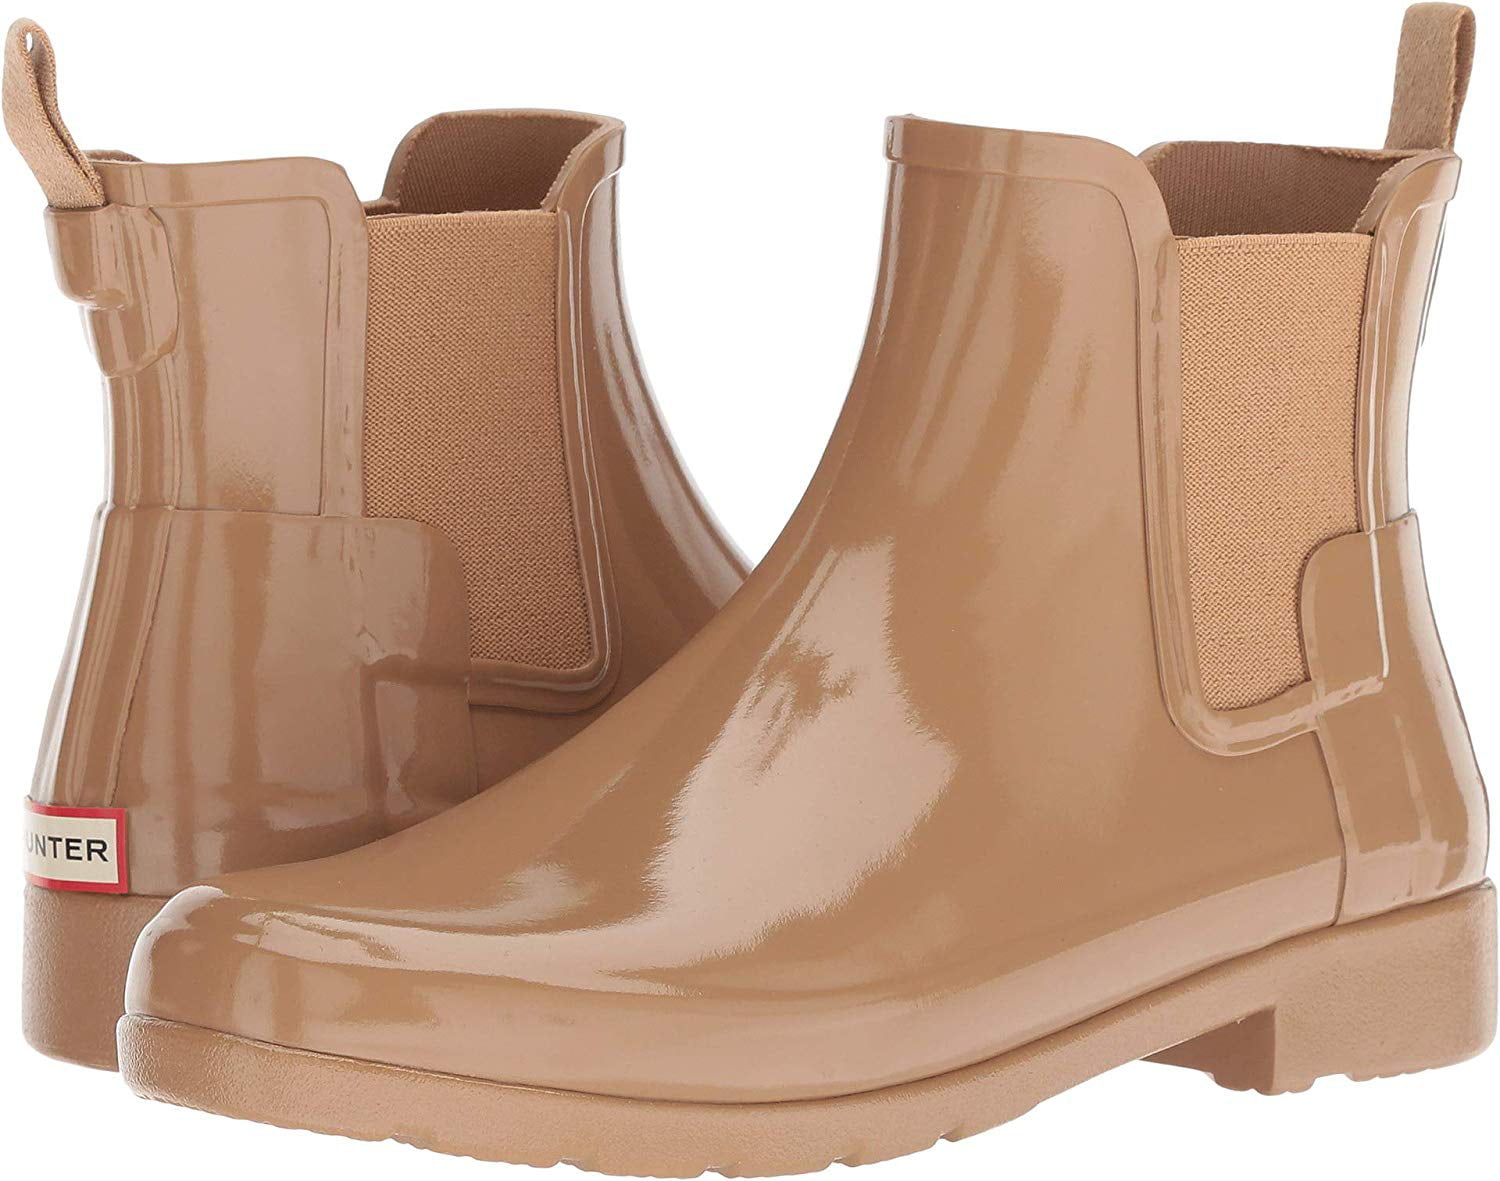 Hunter Women's Original Refined Chelsea Rain Boots, Gloss Tawny, 8 B(M) US